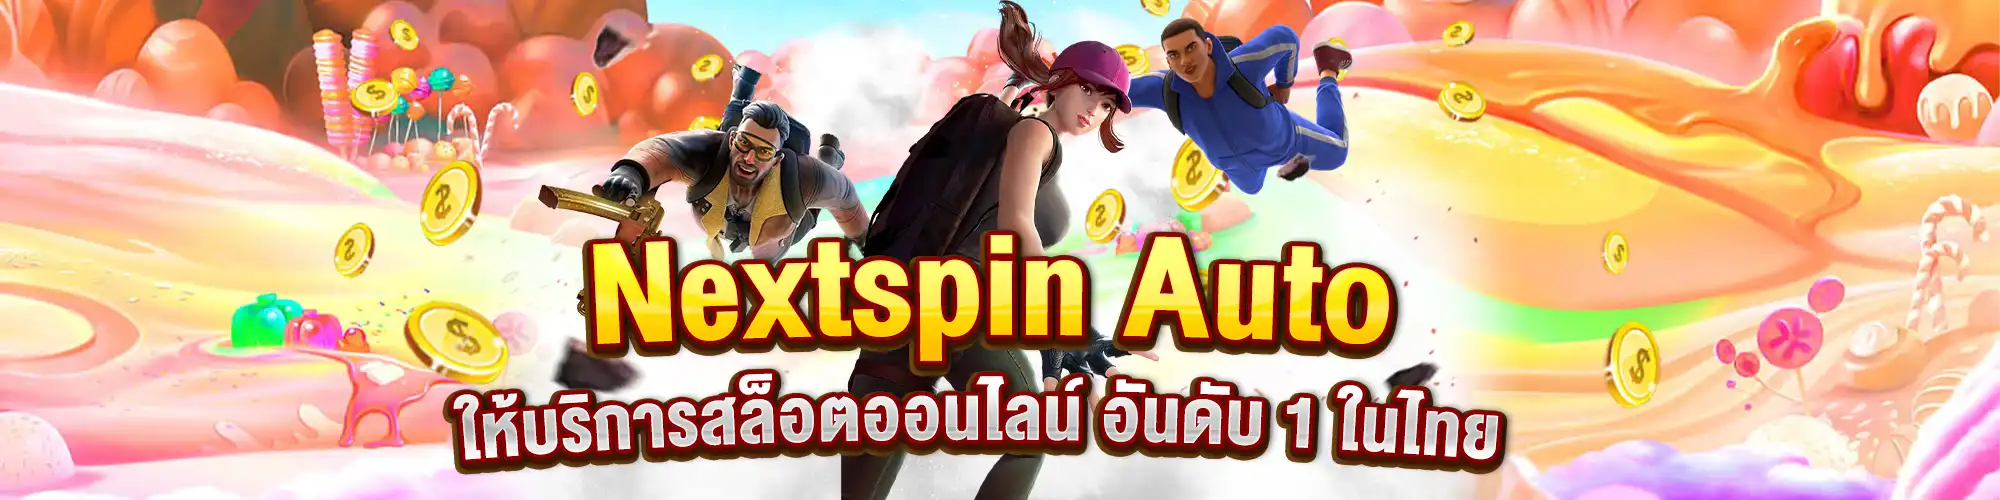 Nextspin Auto ให้บริการสล็อตออนไลน์ อันดับ 1 ในไทย 🎰